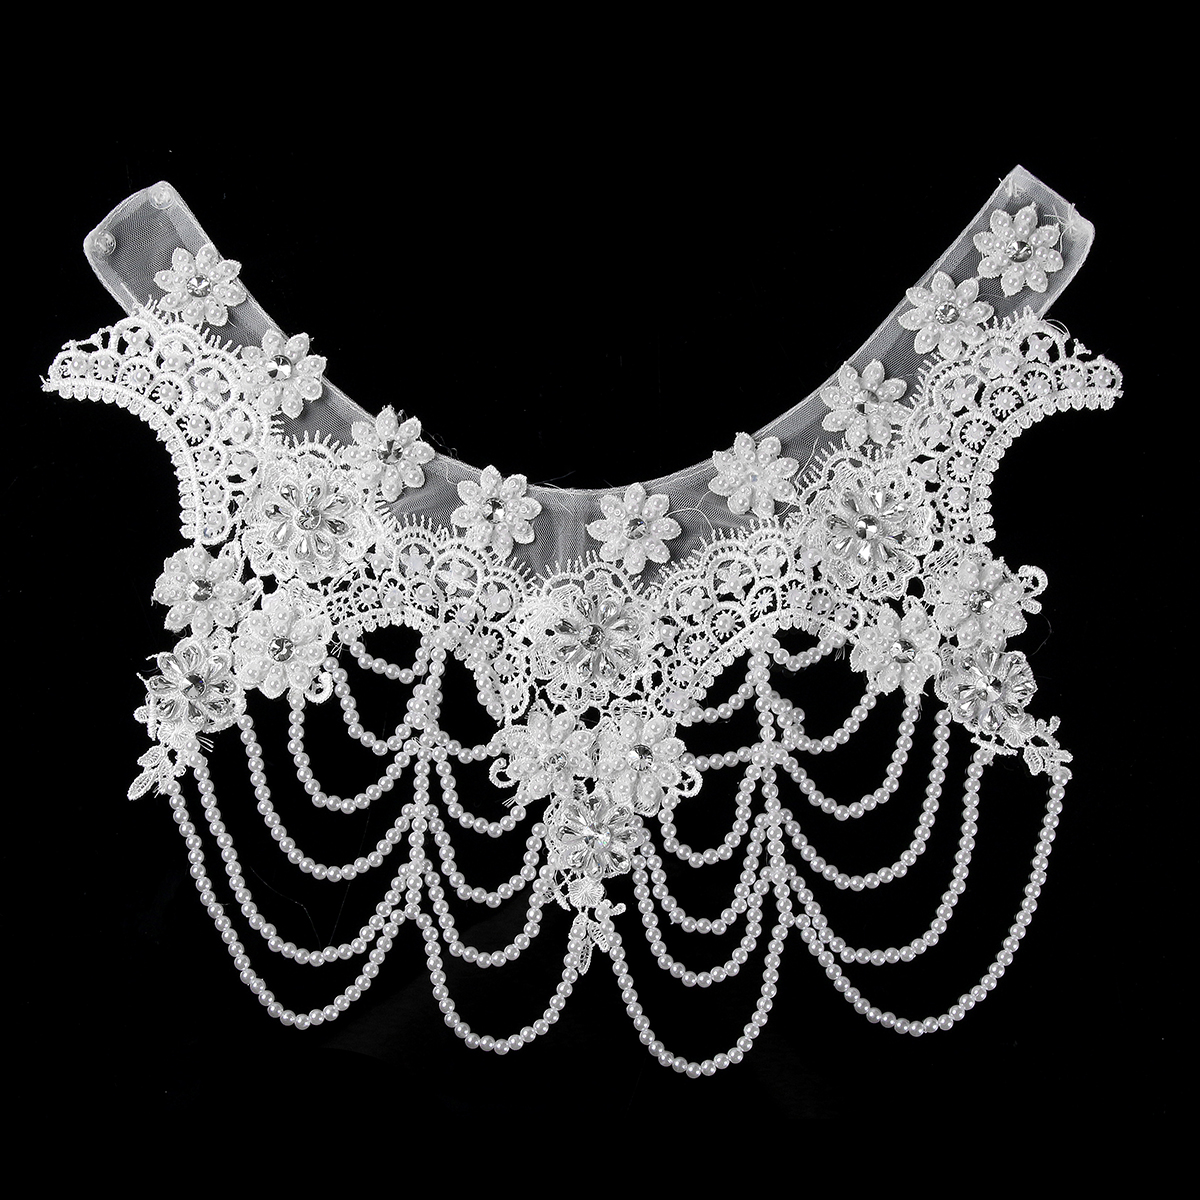 Bride-Diamond-Pearl-Bead-Flower-Lace-Shoulder-Chain-Bridal-Wedding-Dress-Accessories-1118336